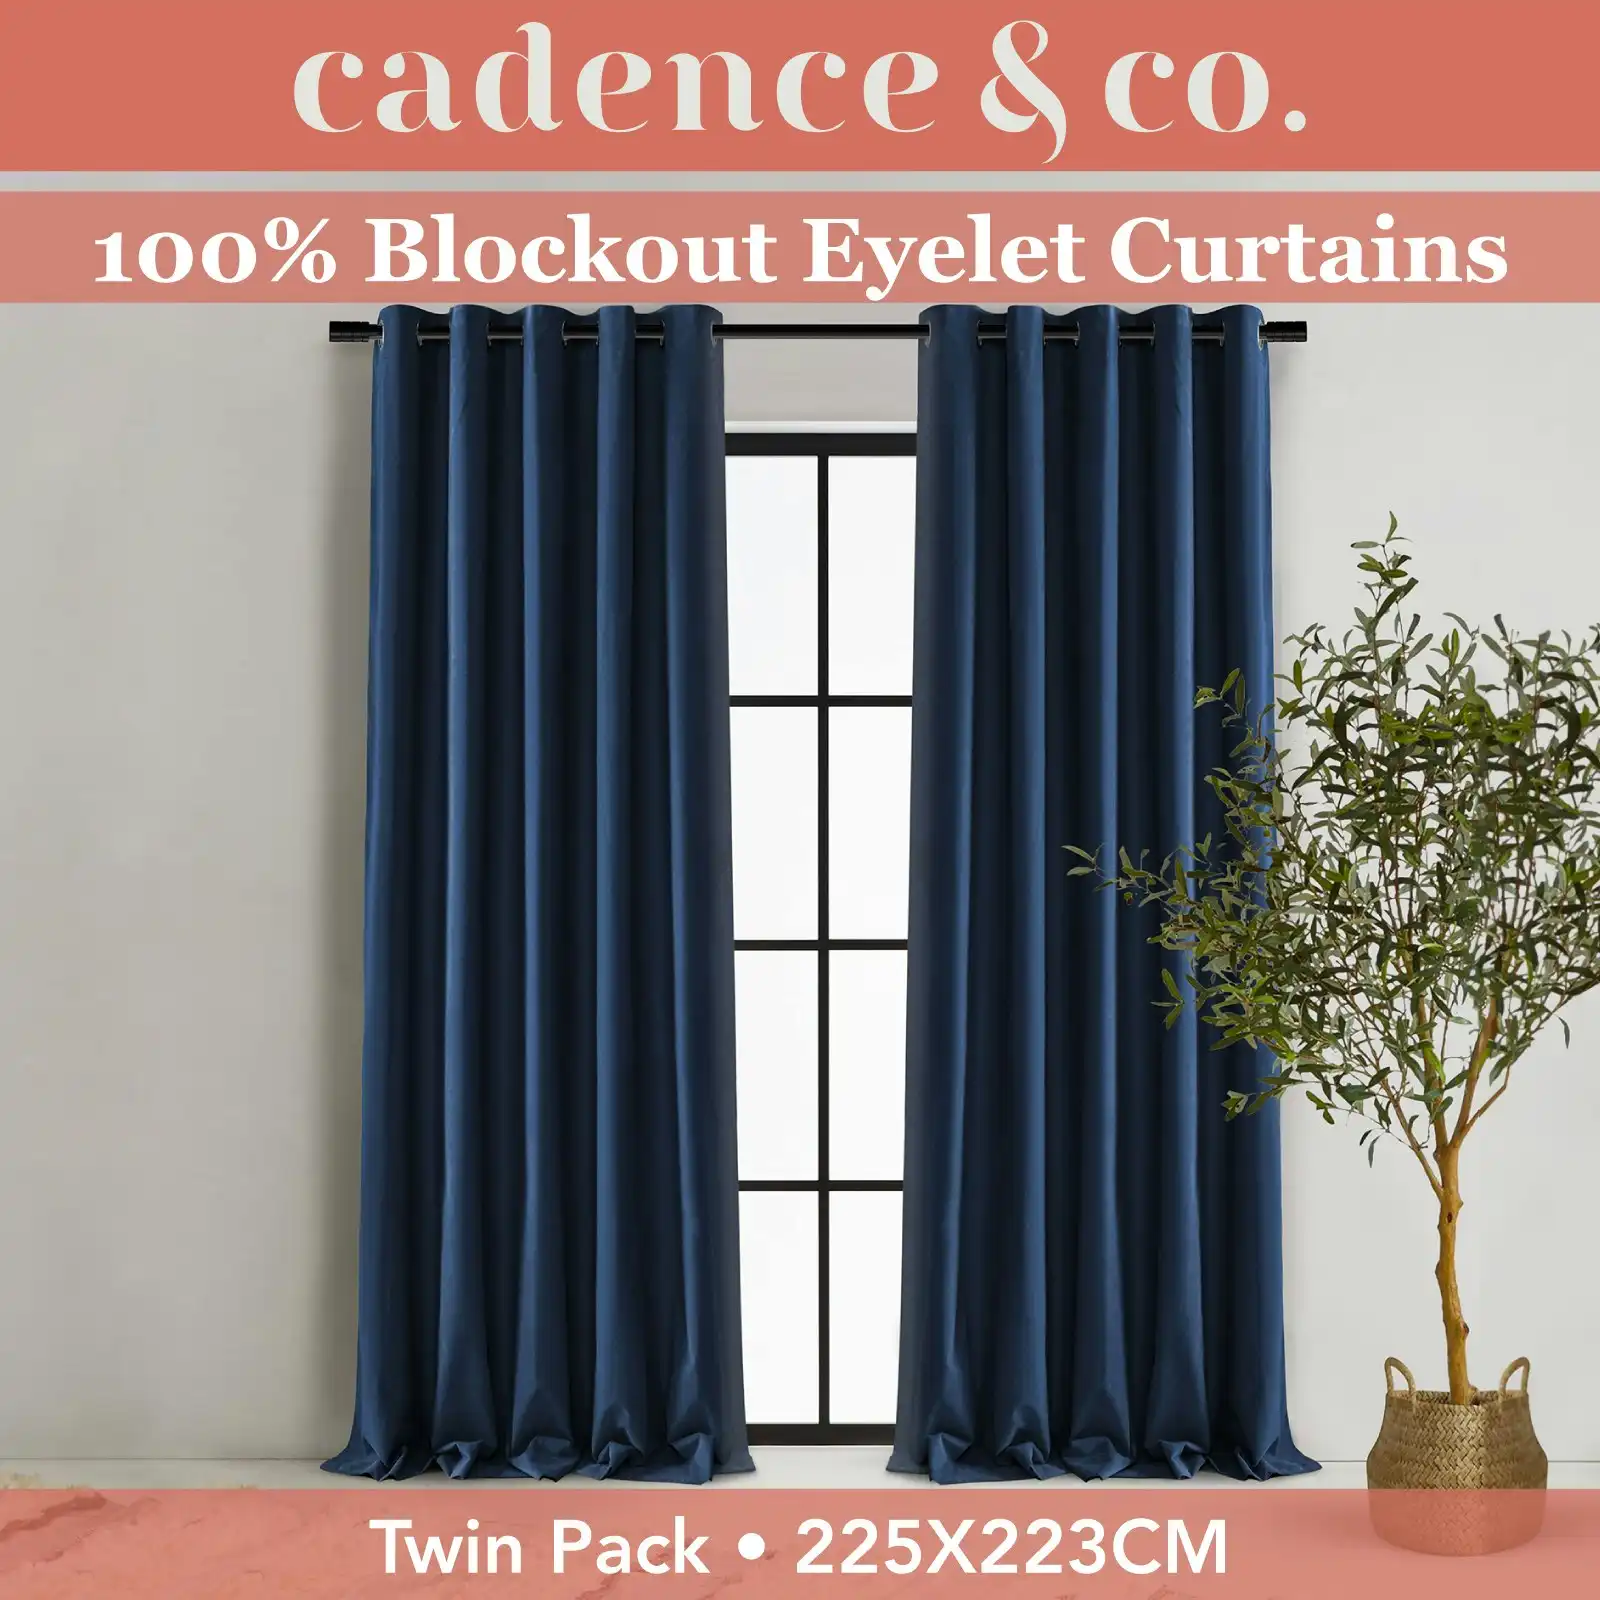 Cadence & Co. Byron Matte Velvet 100% Blockout Eyelet Curtains Twin Pack Ocean Blue 225x223cm